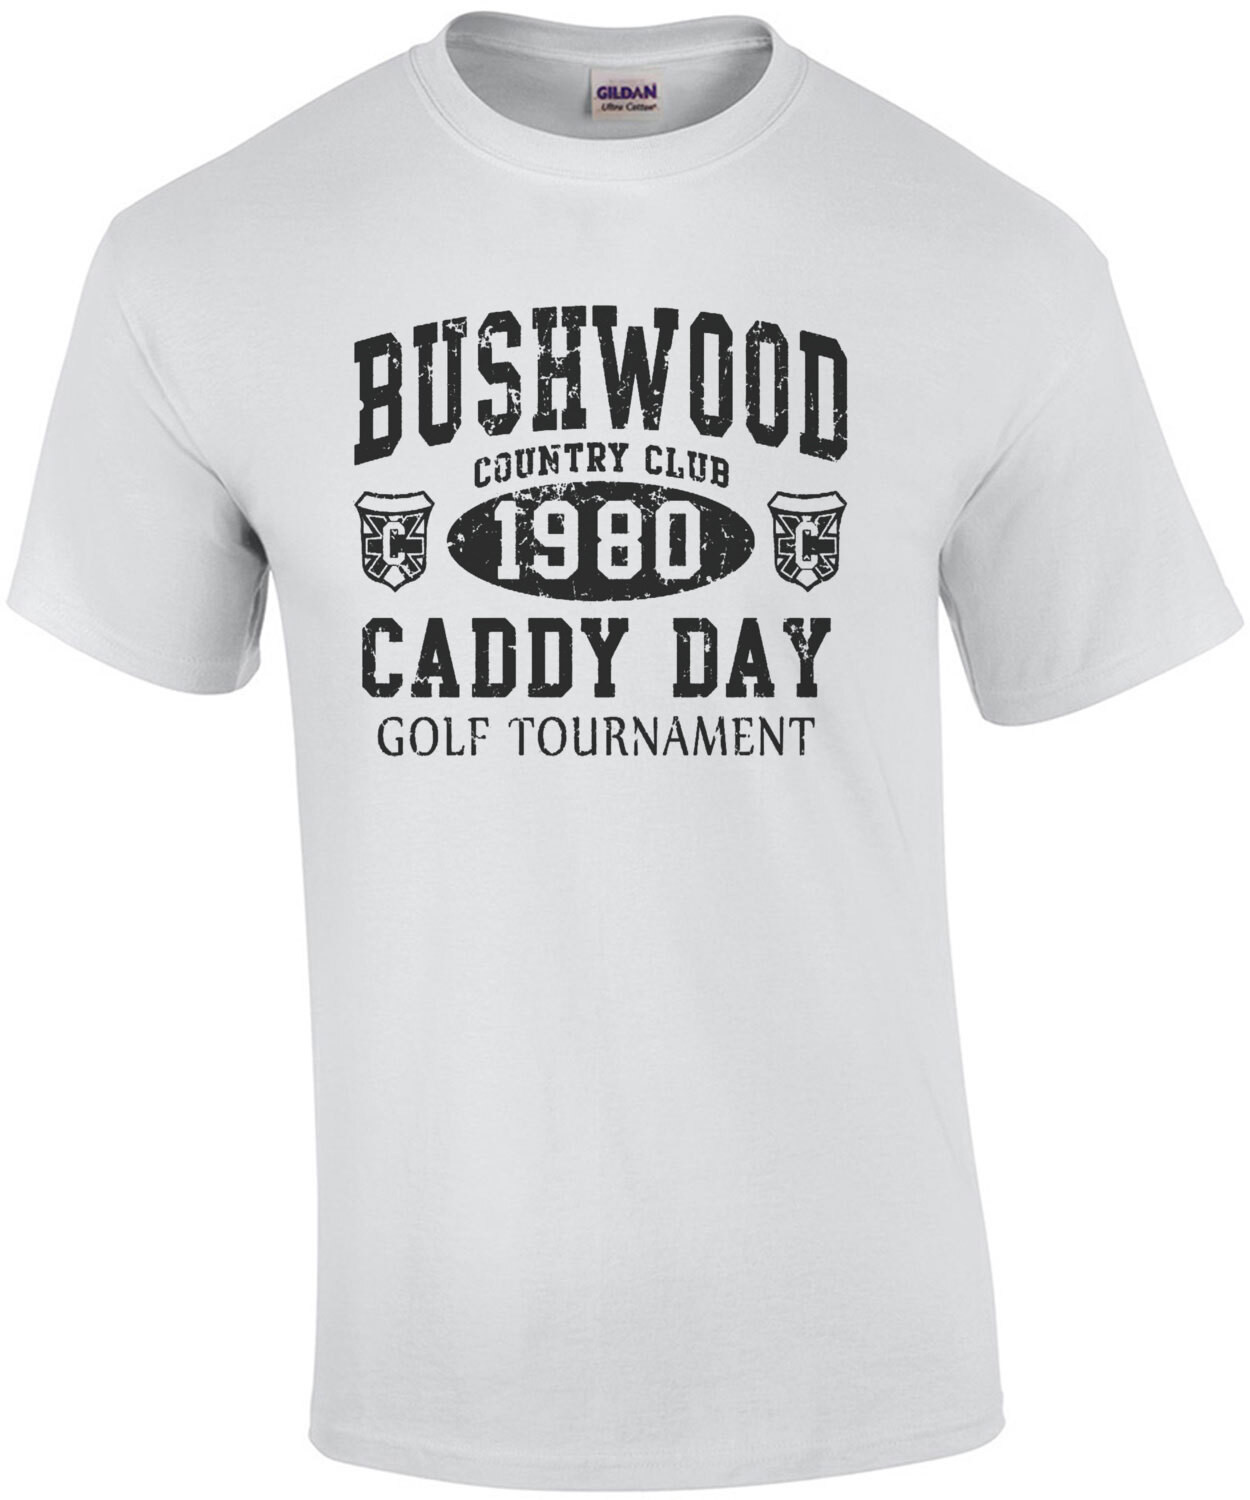 Bushwood Country Club Caddy Tournament - Caddyshack Shirt